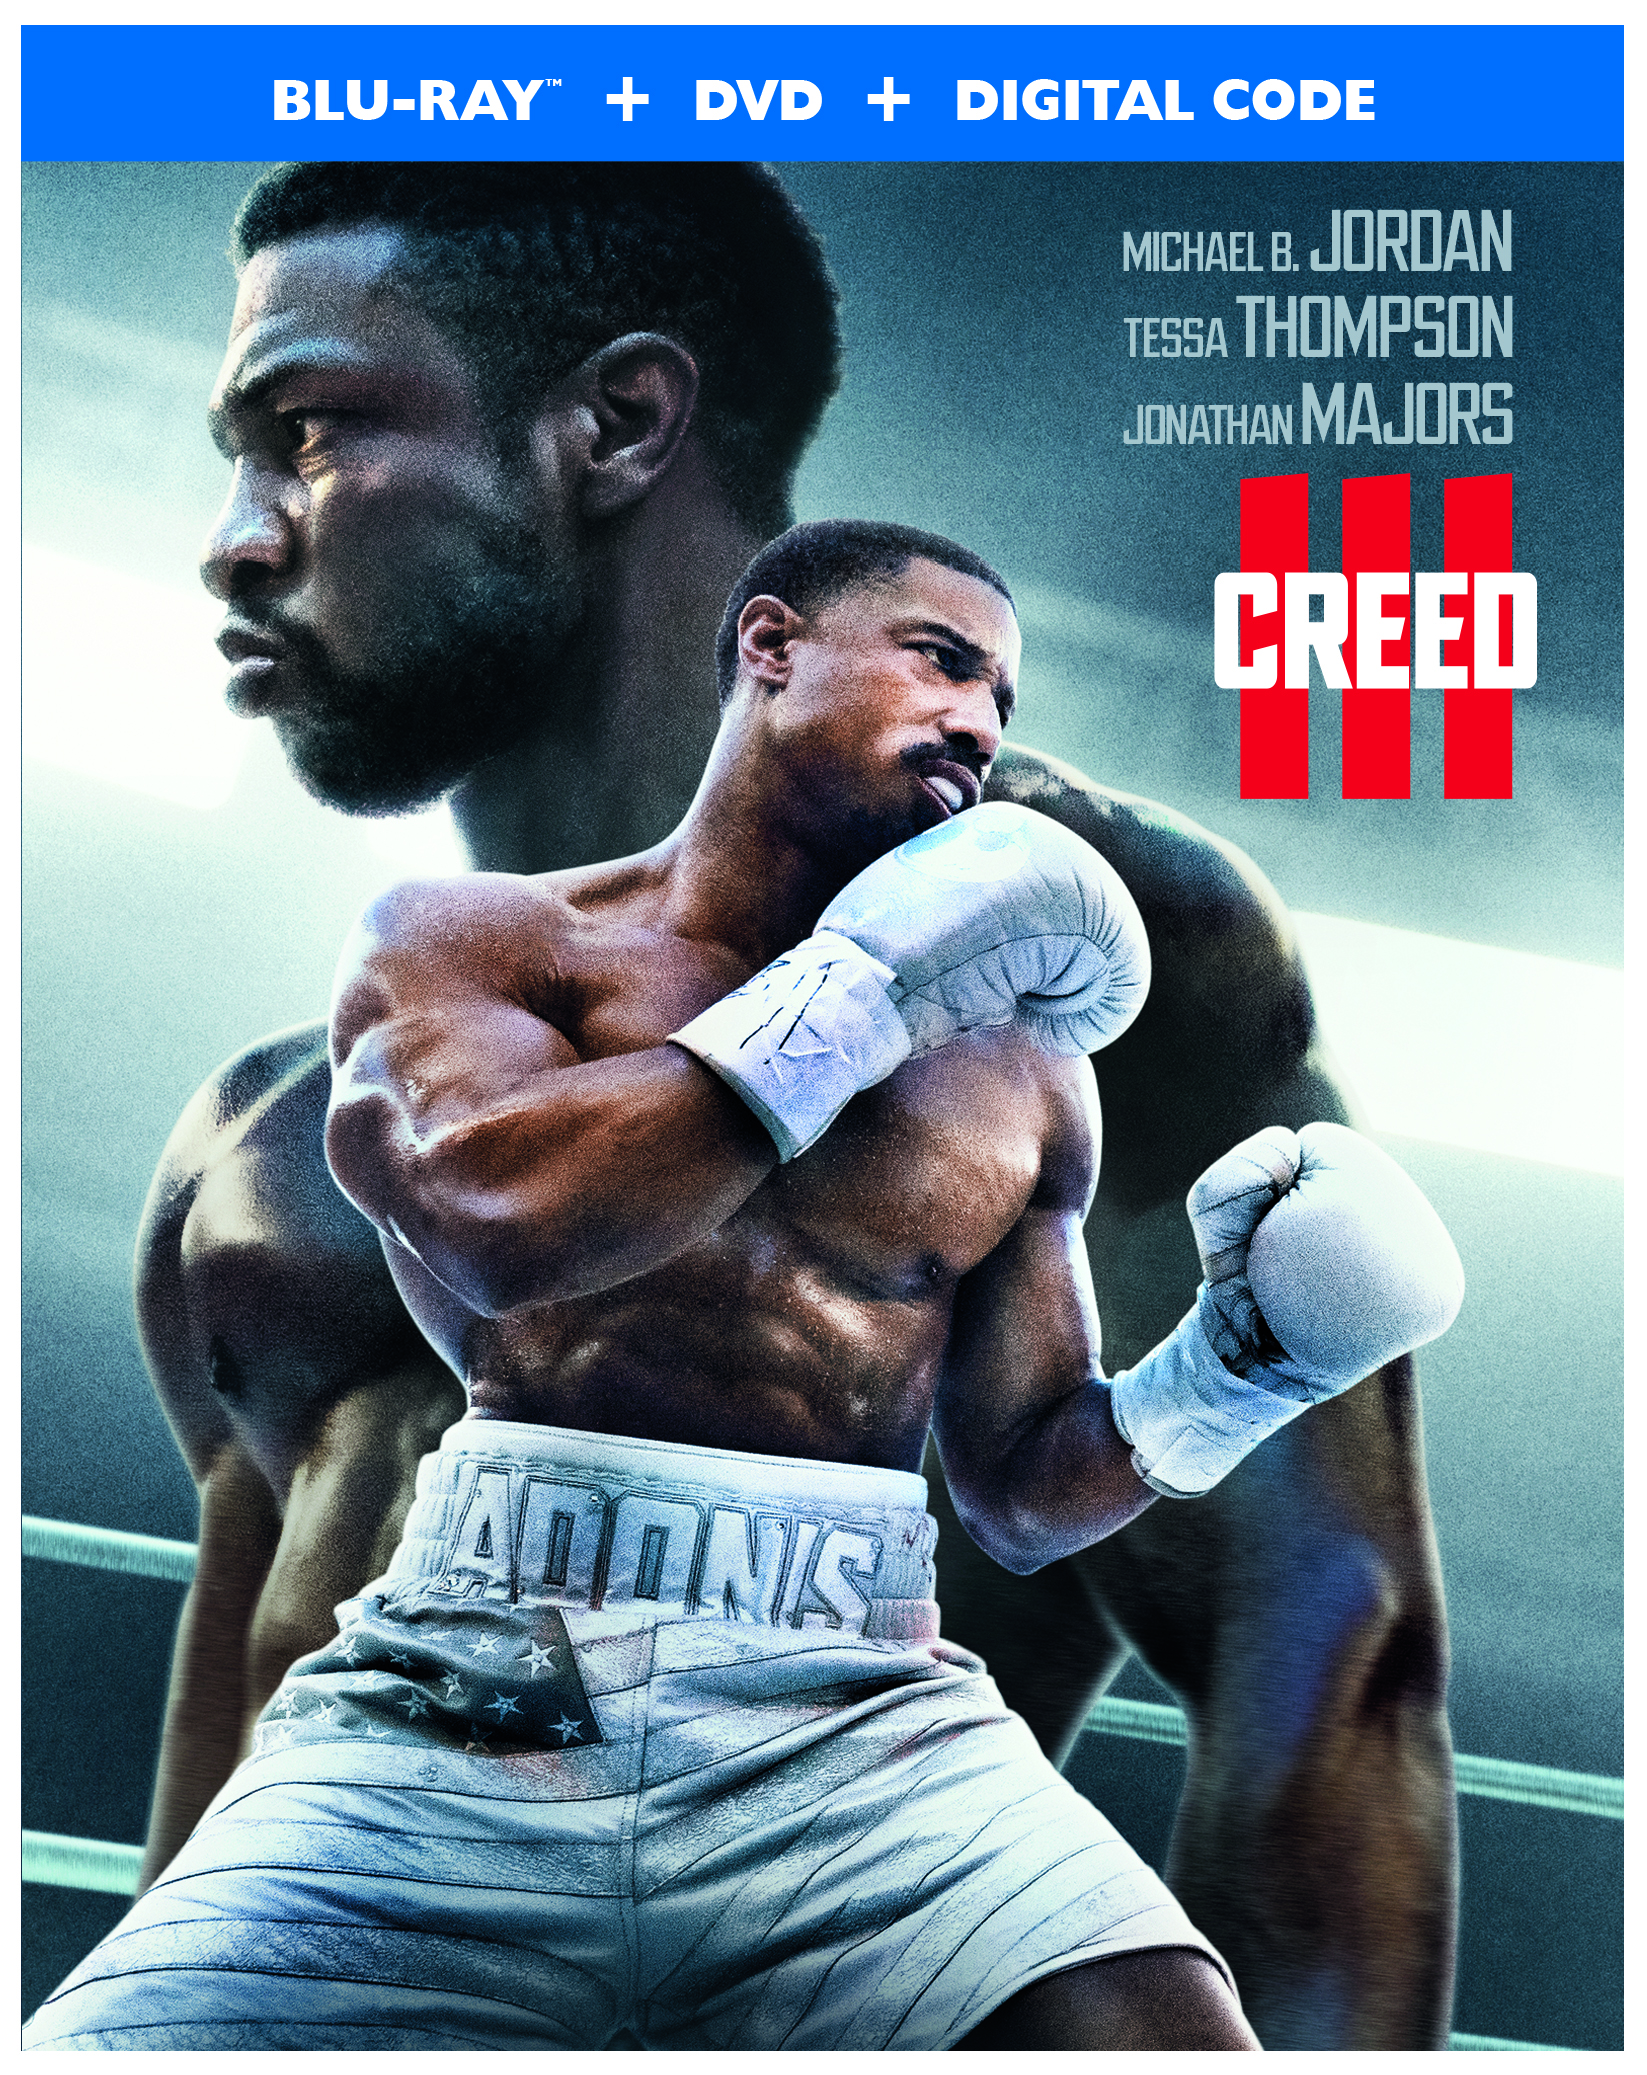 Creed III Blu-ray Review